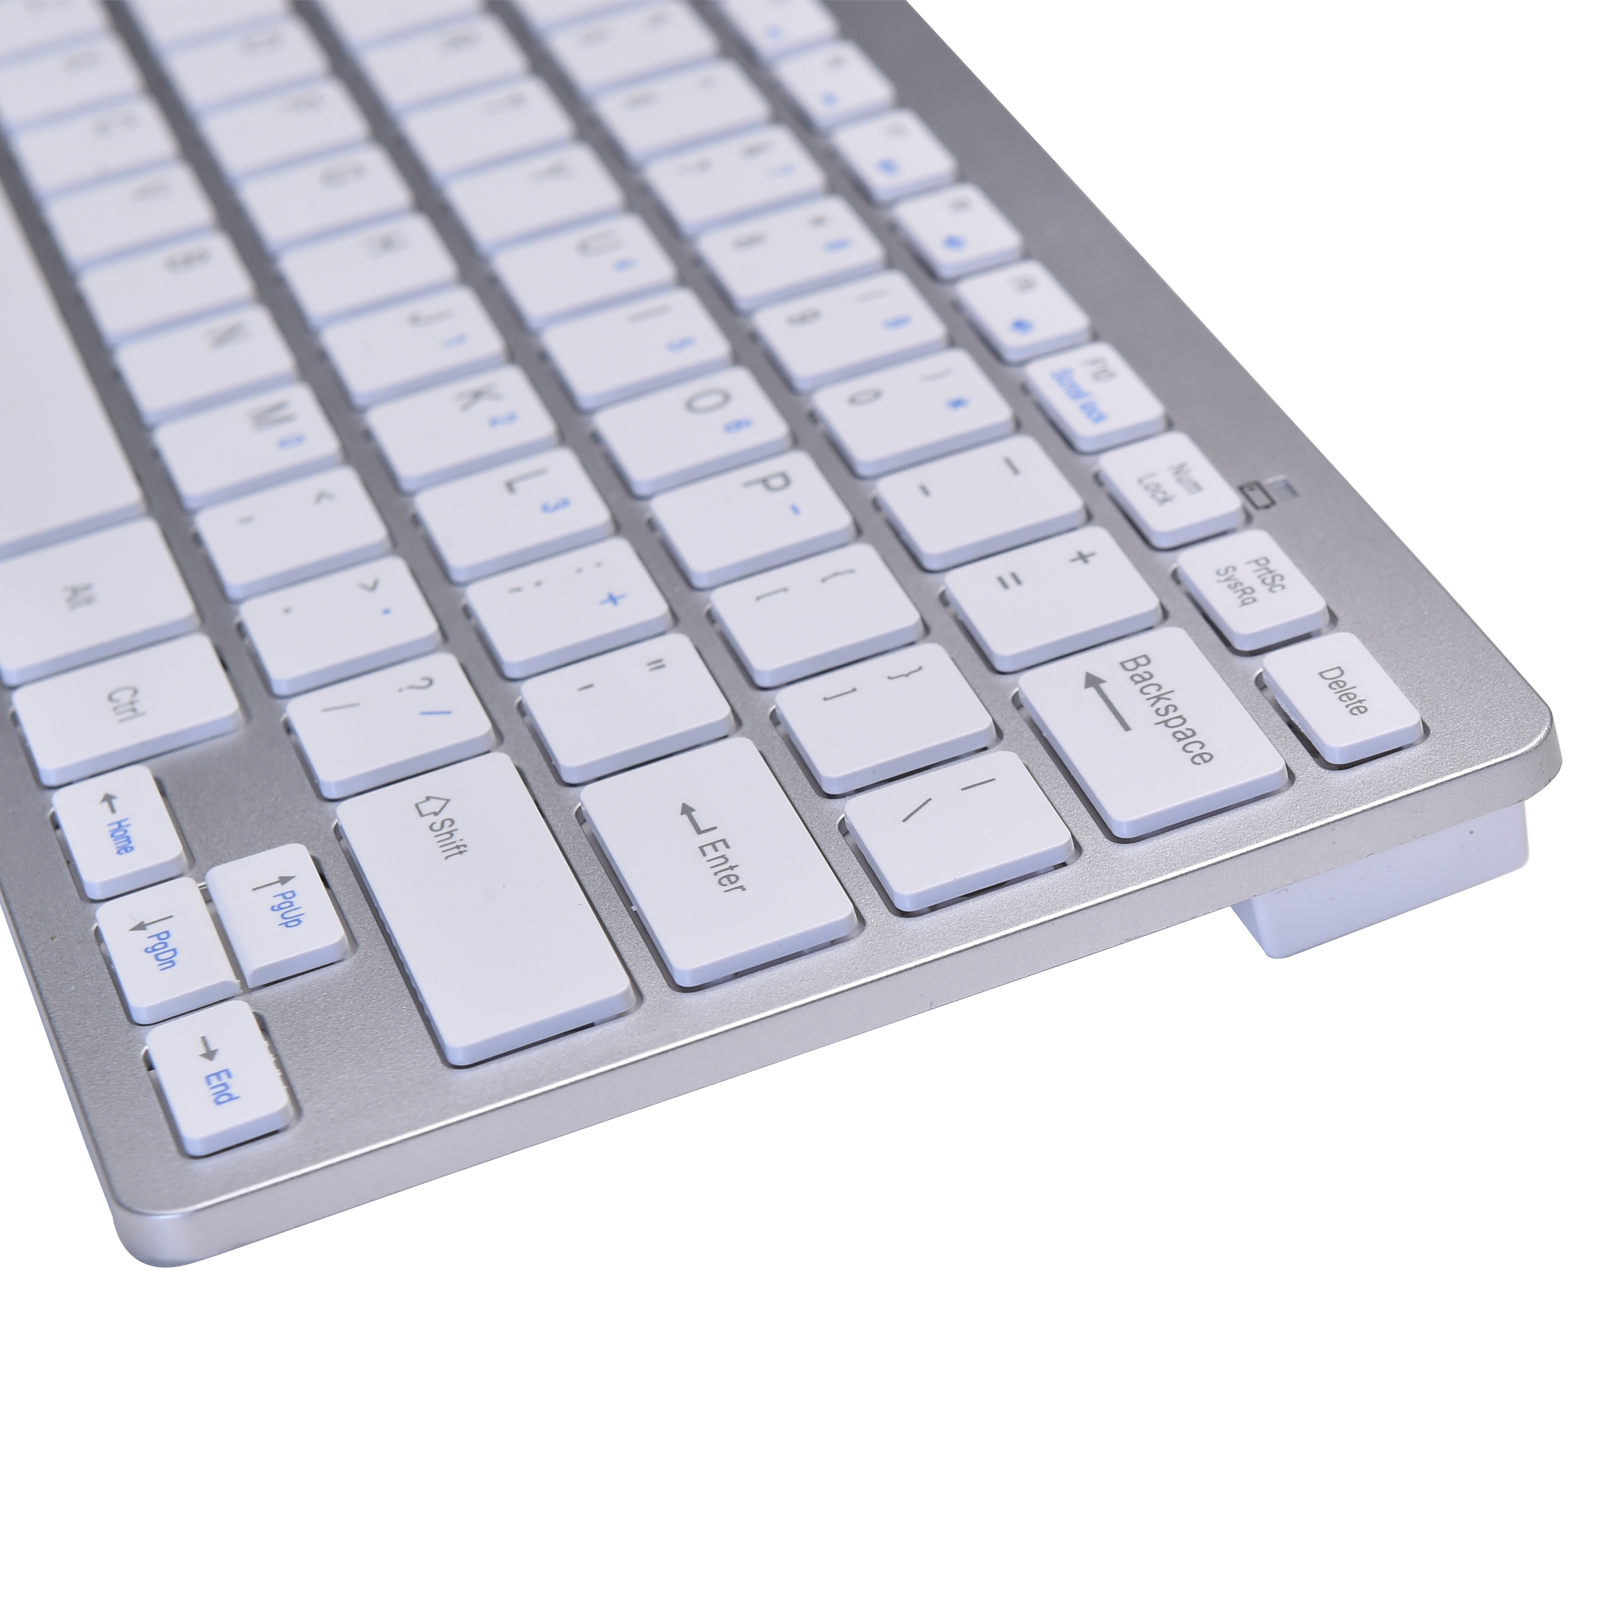 iKKEGOL Mini USB Slim Wired 78-Key Small Compact Keyboard - Click Image to Close